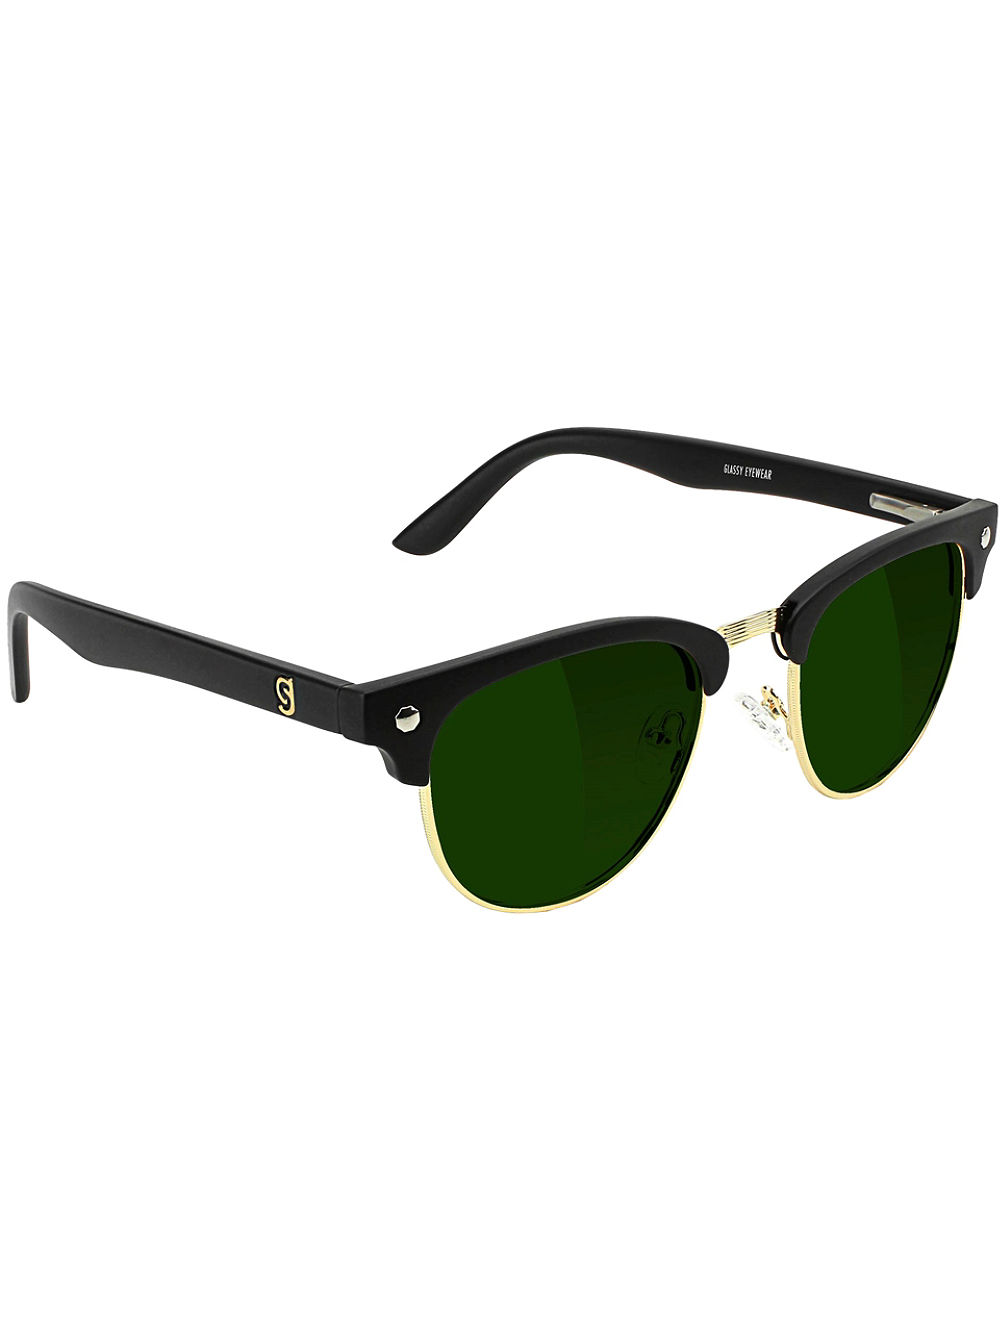 Morrison Premium Polarized Black/Green L Gafas de Sol